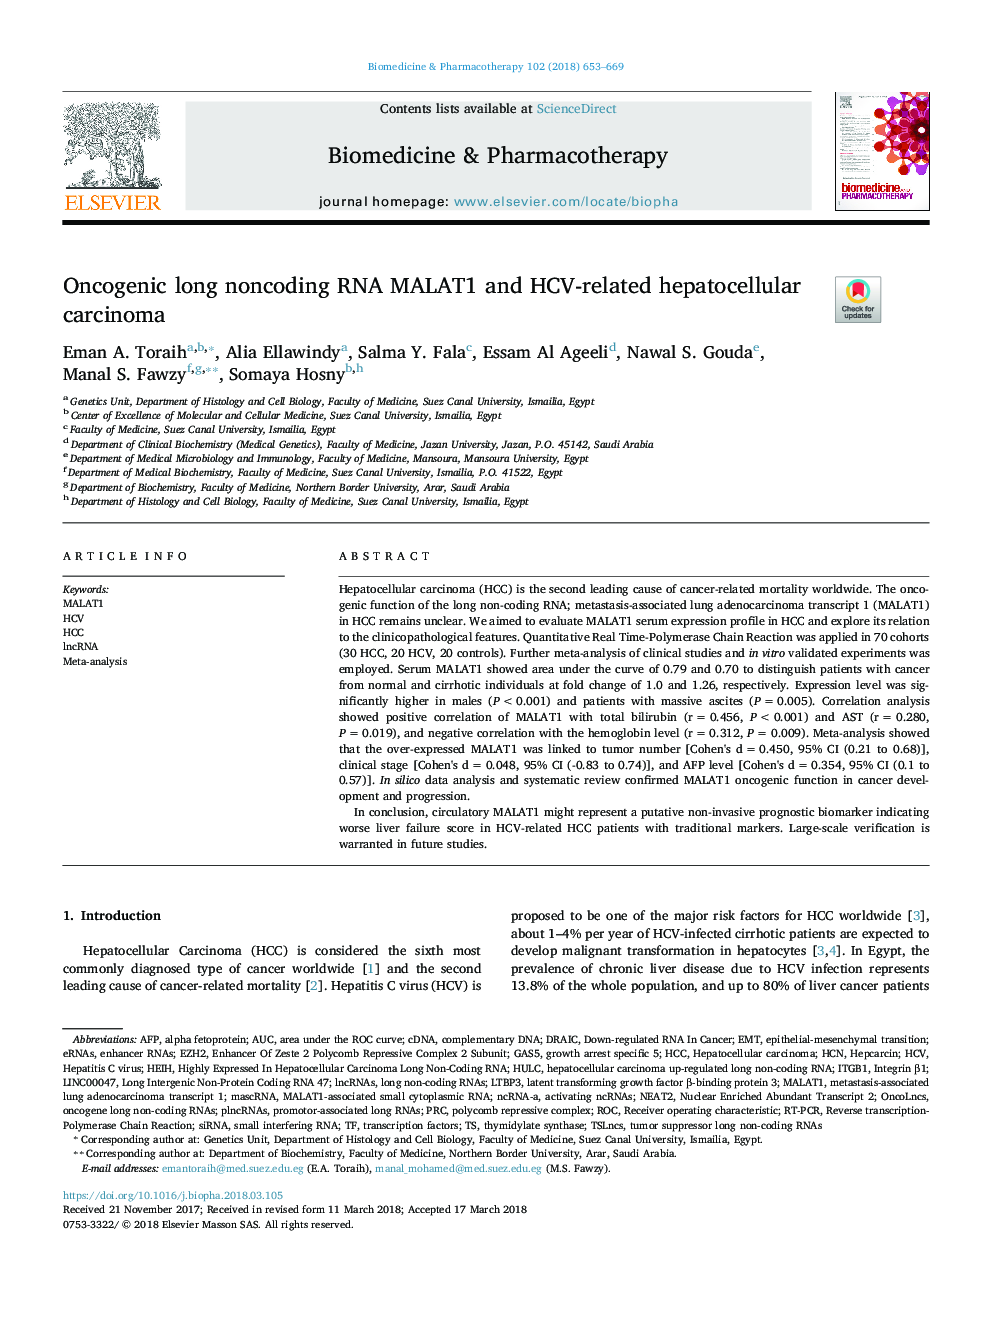 Oncogenic long noncoding RNA MALAT1 and HCV-related hepatocellular carcinoma